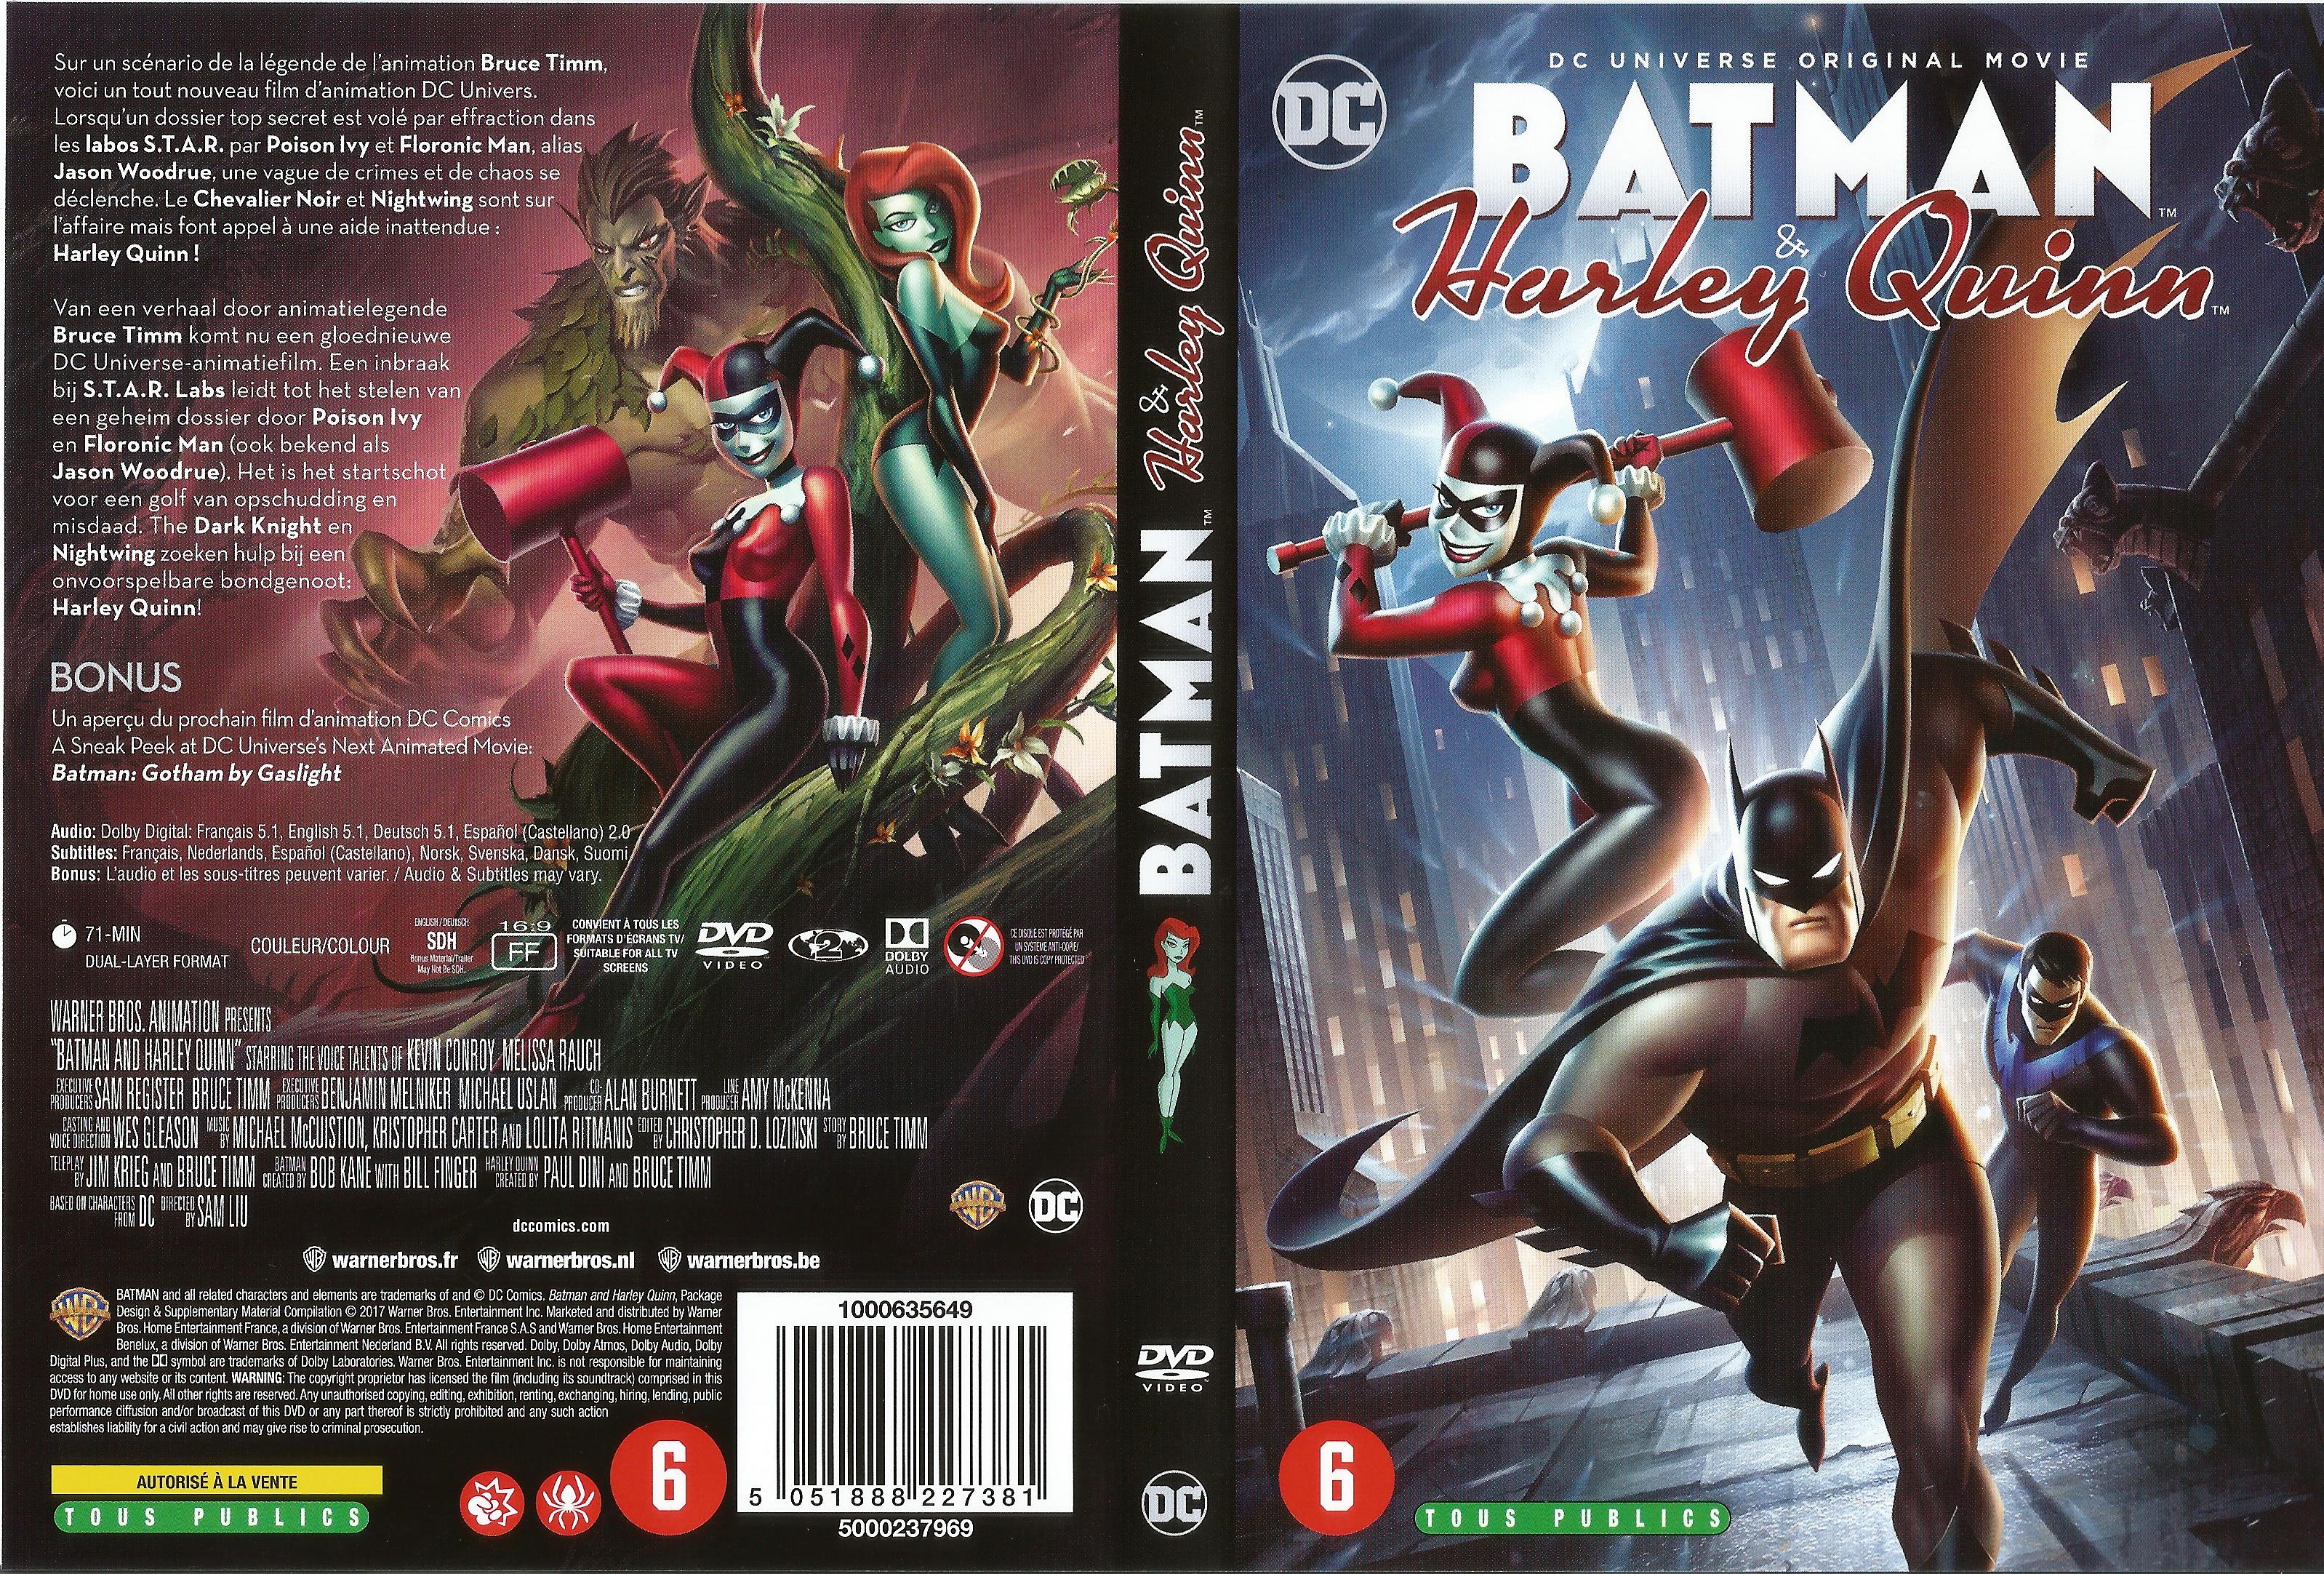 Jaquette DVD Batman & Harley Quinn